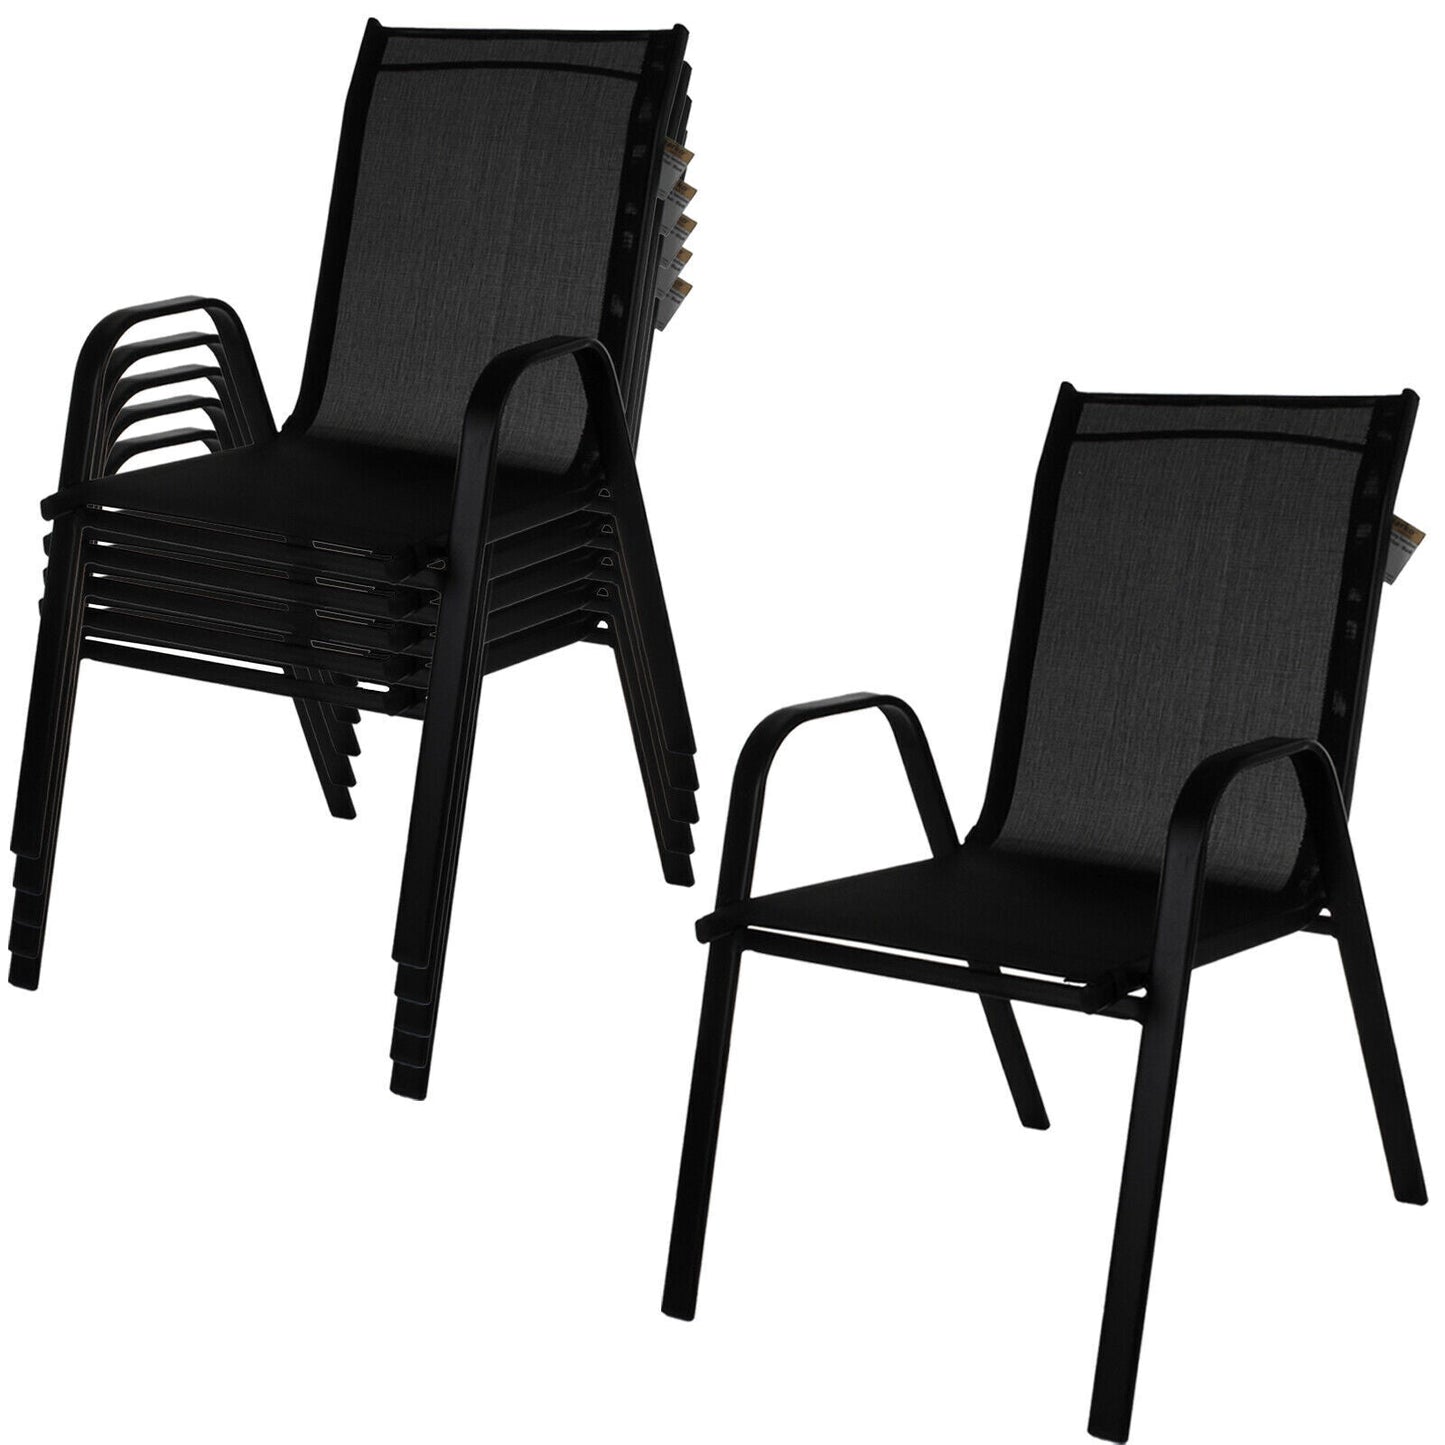 Copy of 9PC Rectangular White Frame Black Glass Table, Black Chair & Parasol Furniture Set